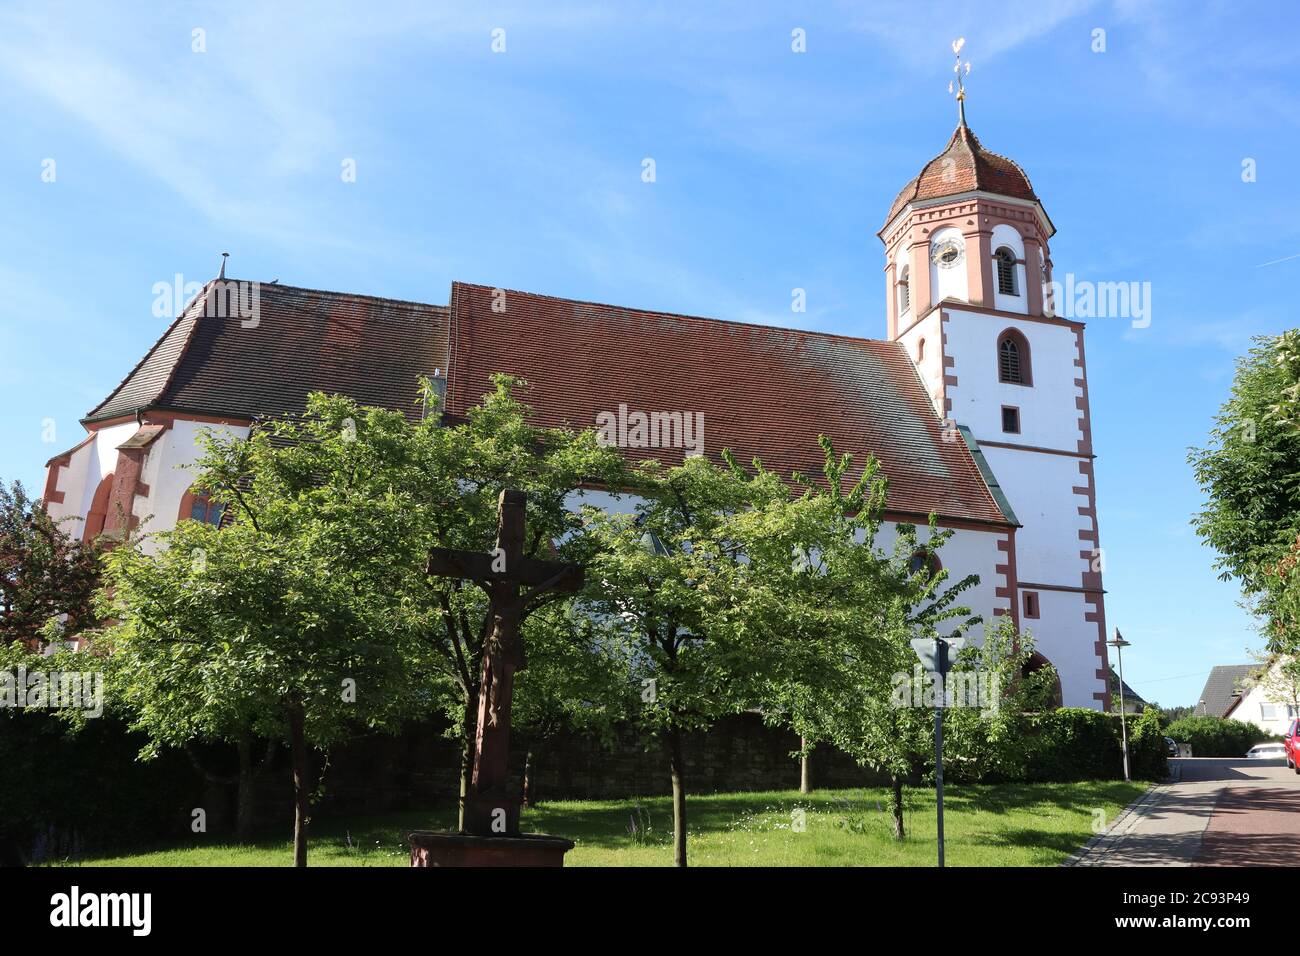 Neuhausen bei Pforzheim, Baden-Württemberg/ Nessuno - Giugno 02 2019: La chiesa cattolica 'st. Urban und Vitus' nella città di Neuhausen, vicino a Pforzheim, Germania Foto Stock